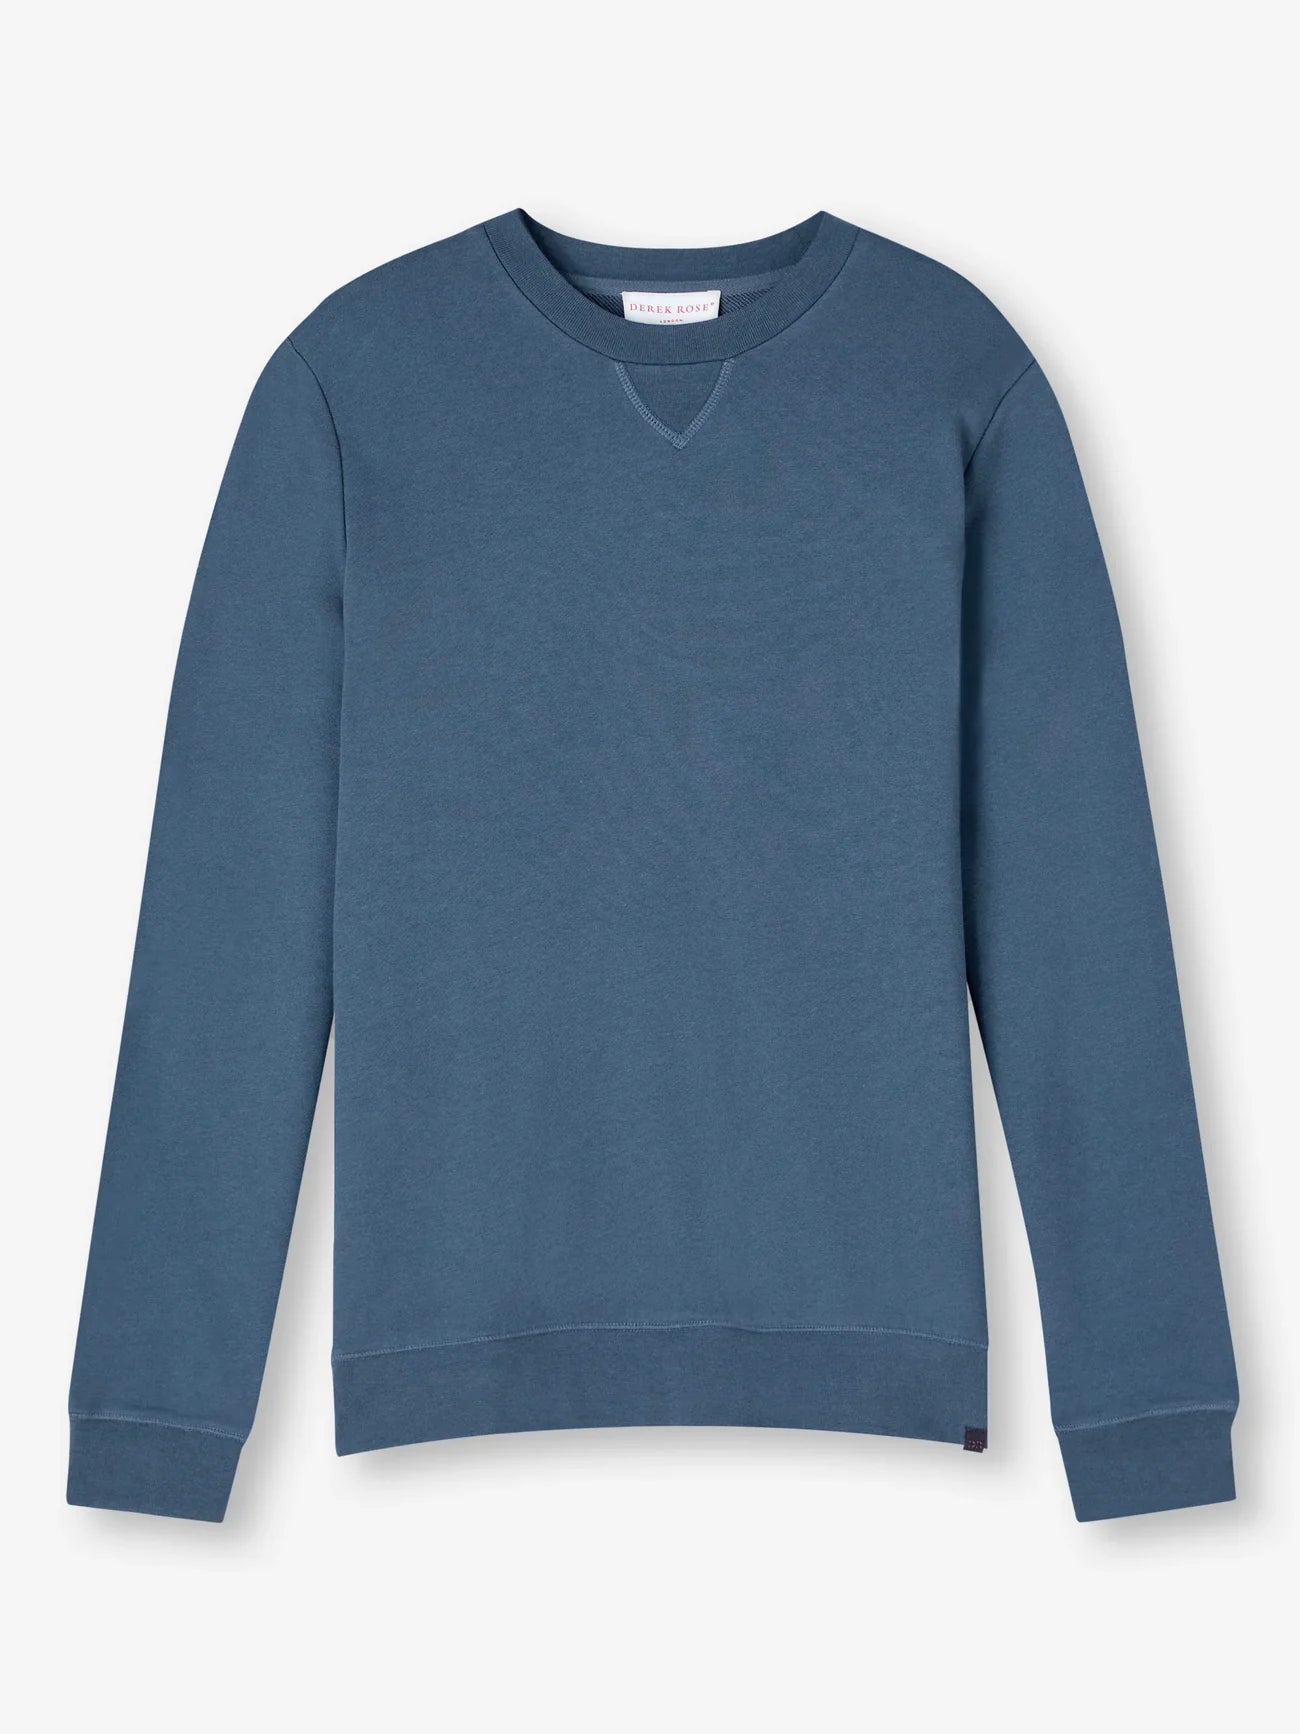 Quinn Cotton Modal Sweatshirt - Denim